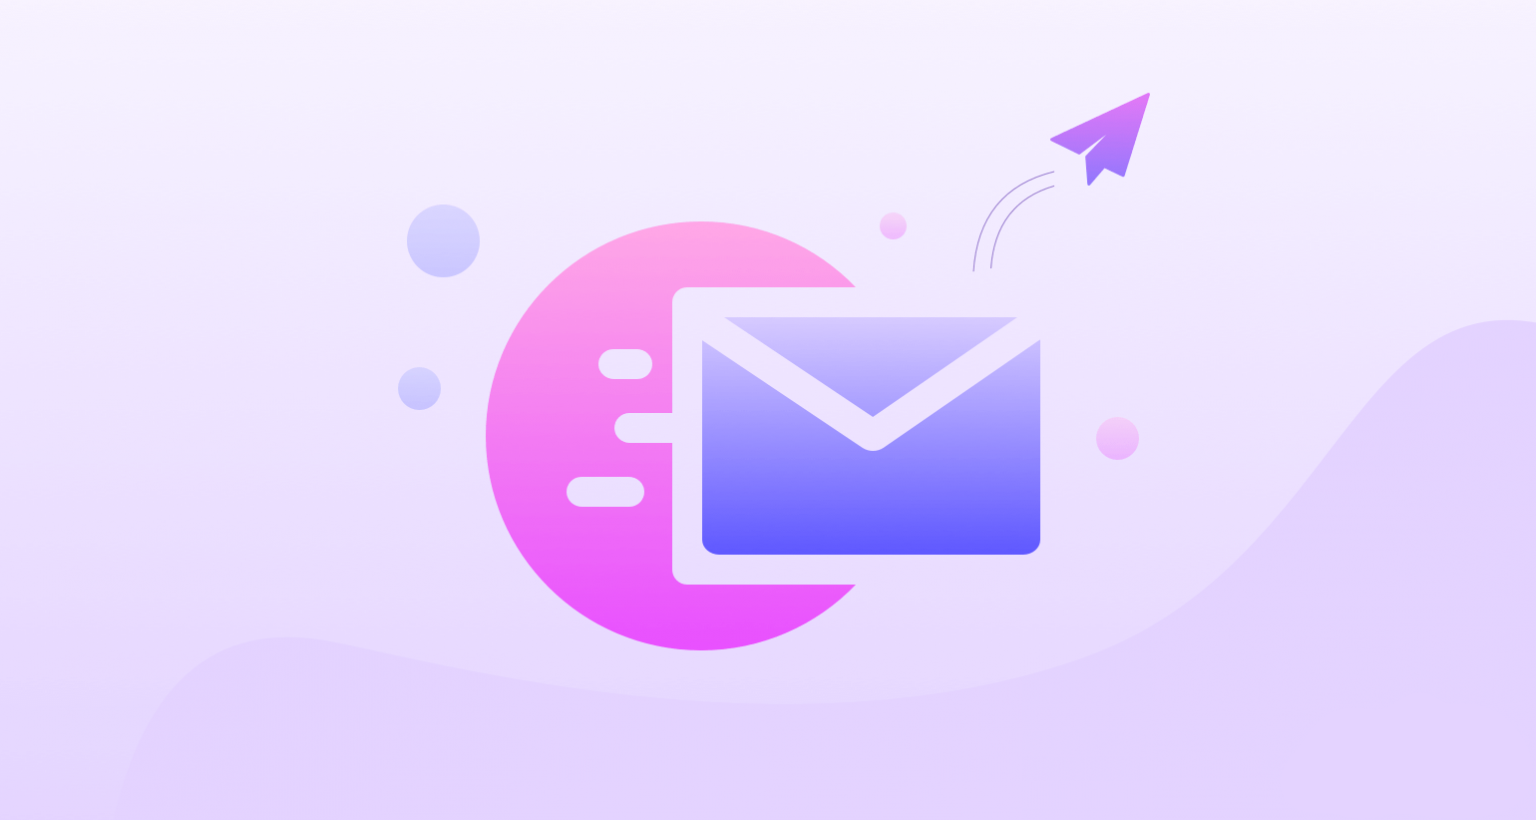 Email-gateway-1536x820